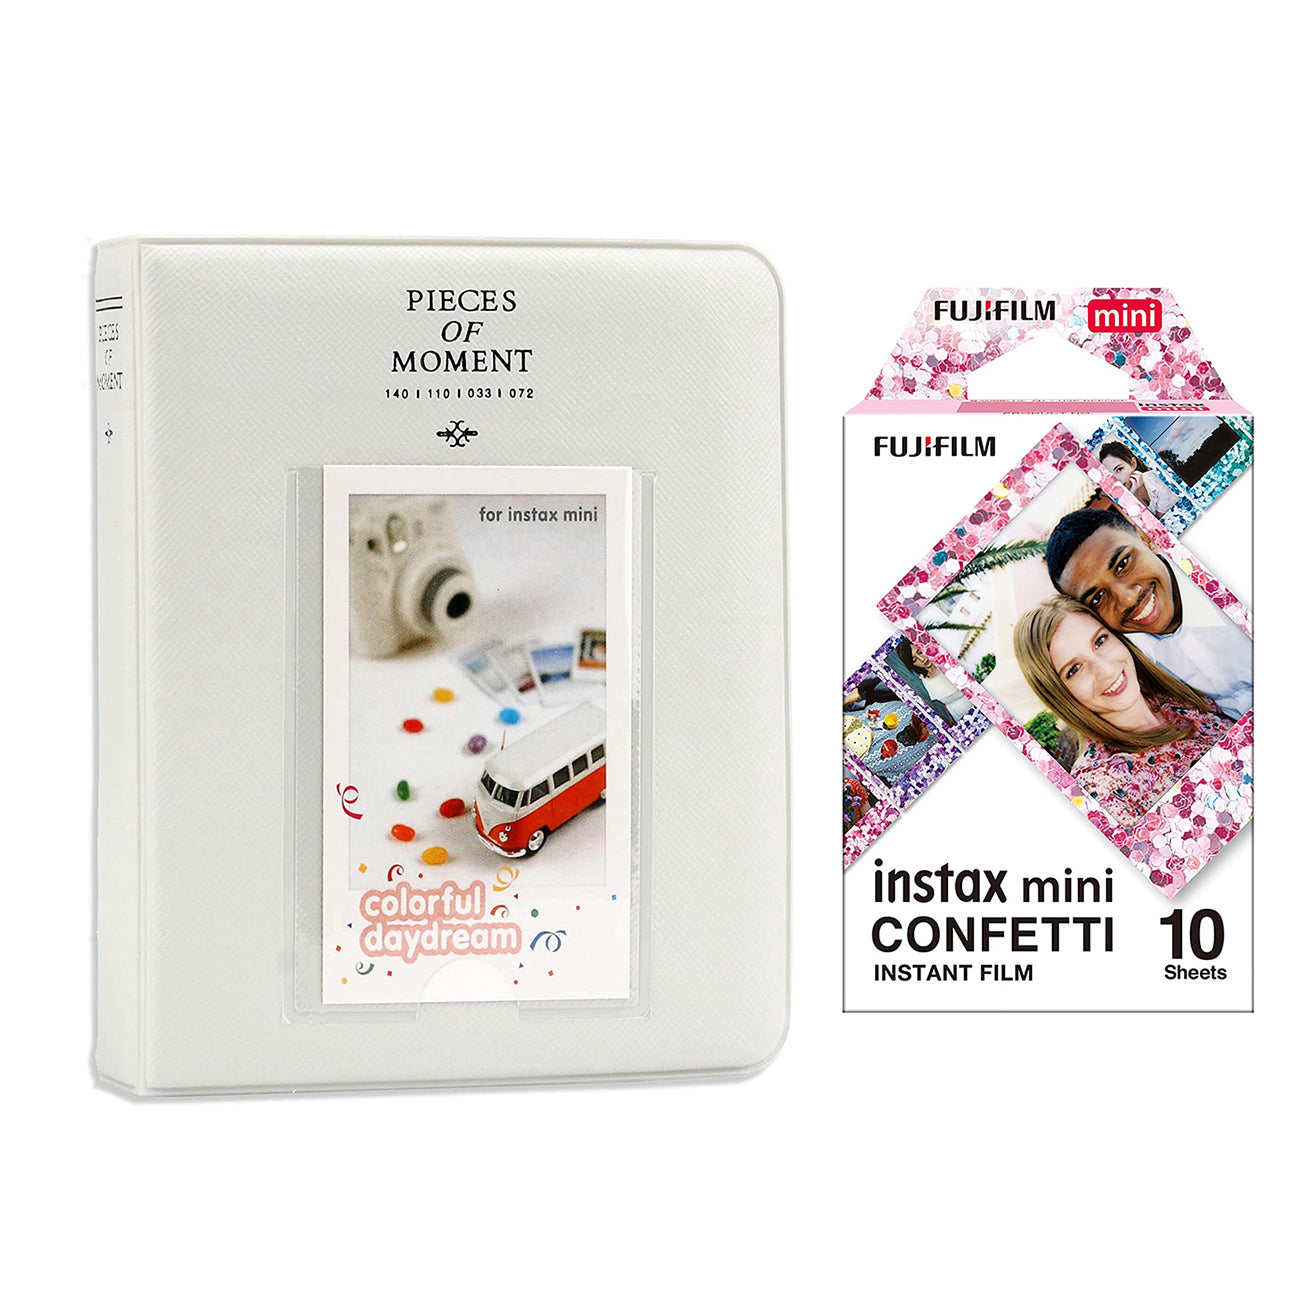 Fujifilm Instax Mini 10X1 confetti Instant Film with Instax Time Photo Album 64 Sheets (ice white)